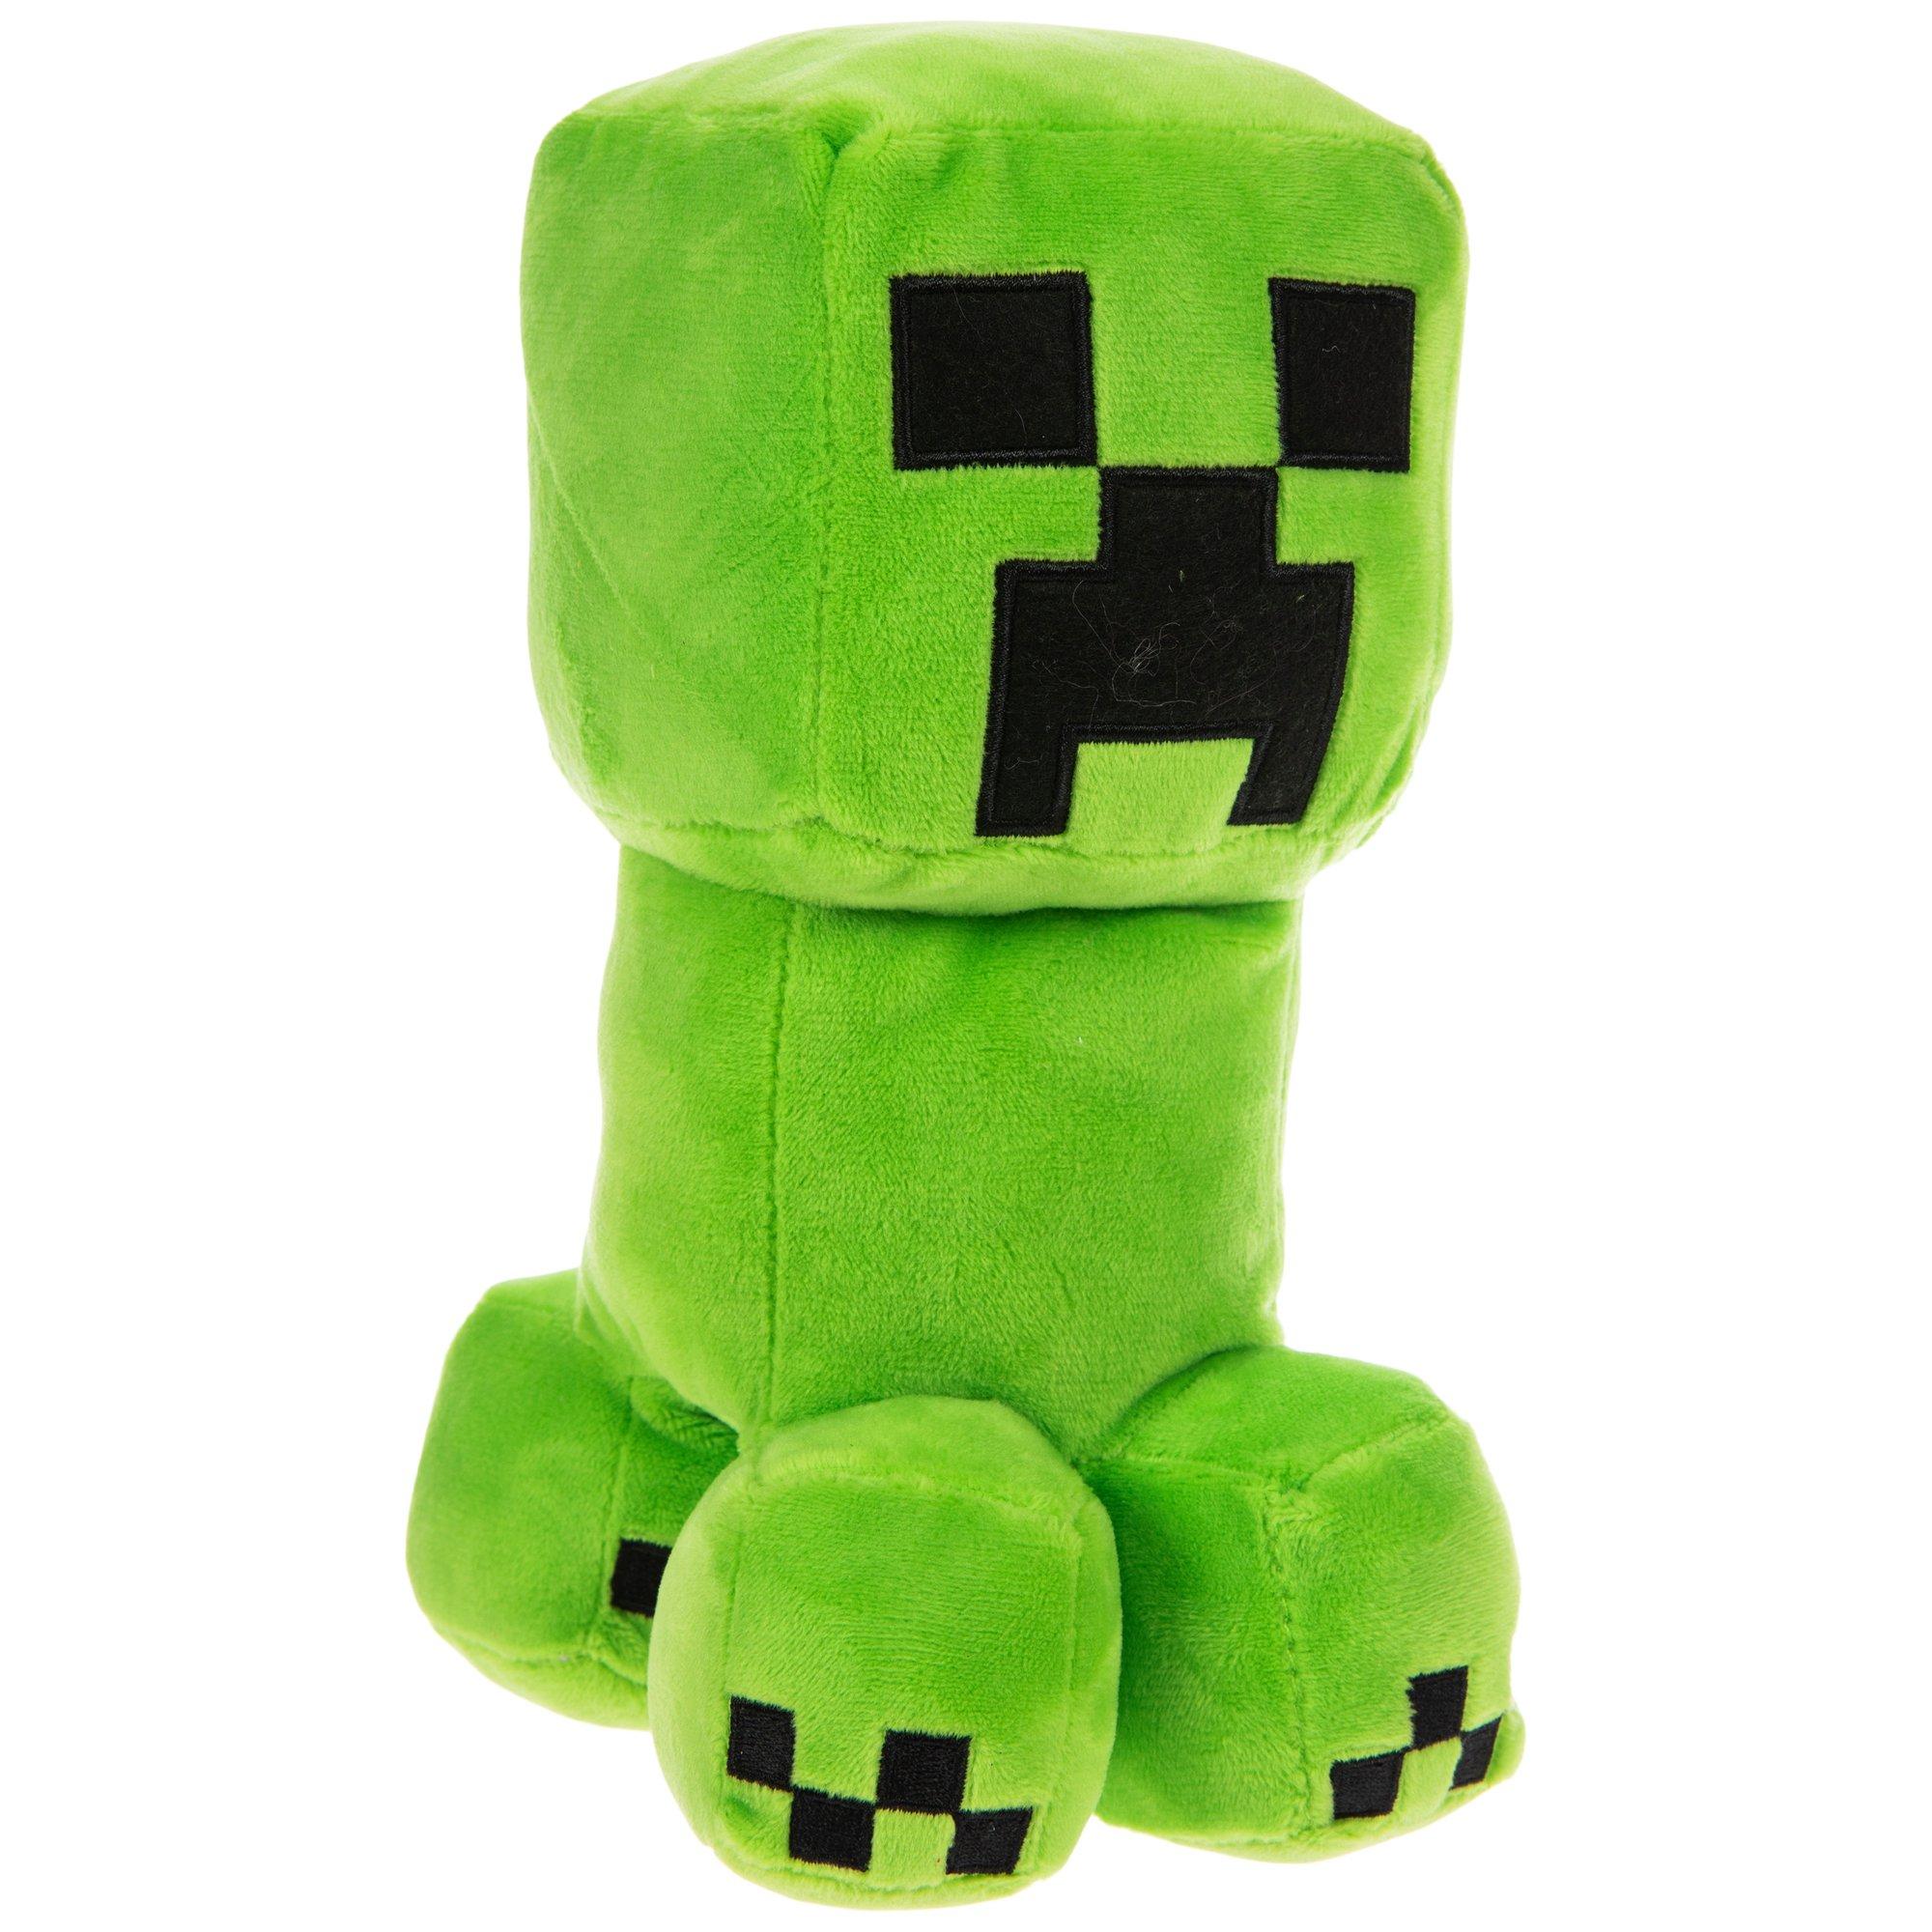 Toy Minecraft Plush Toy Creeper Stuffed Animal Soft Plush Kids